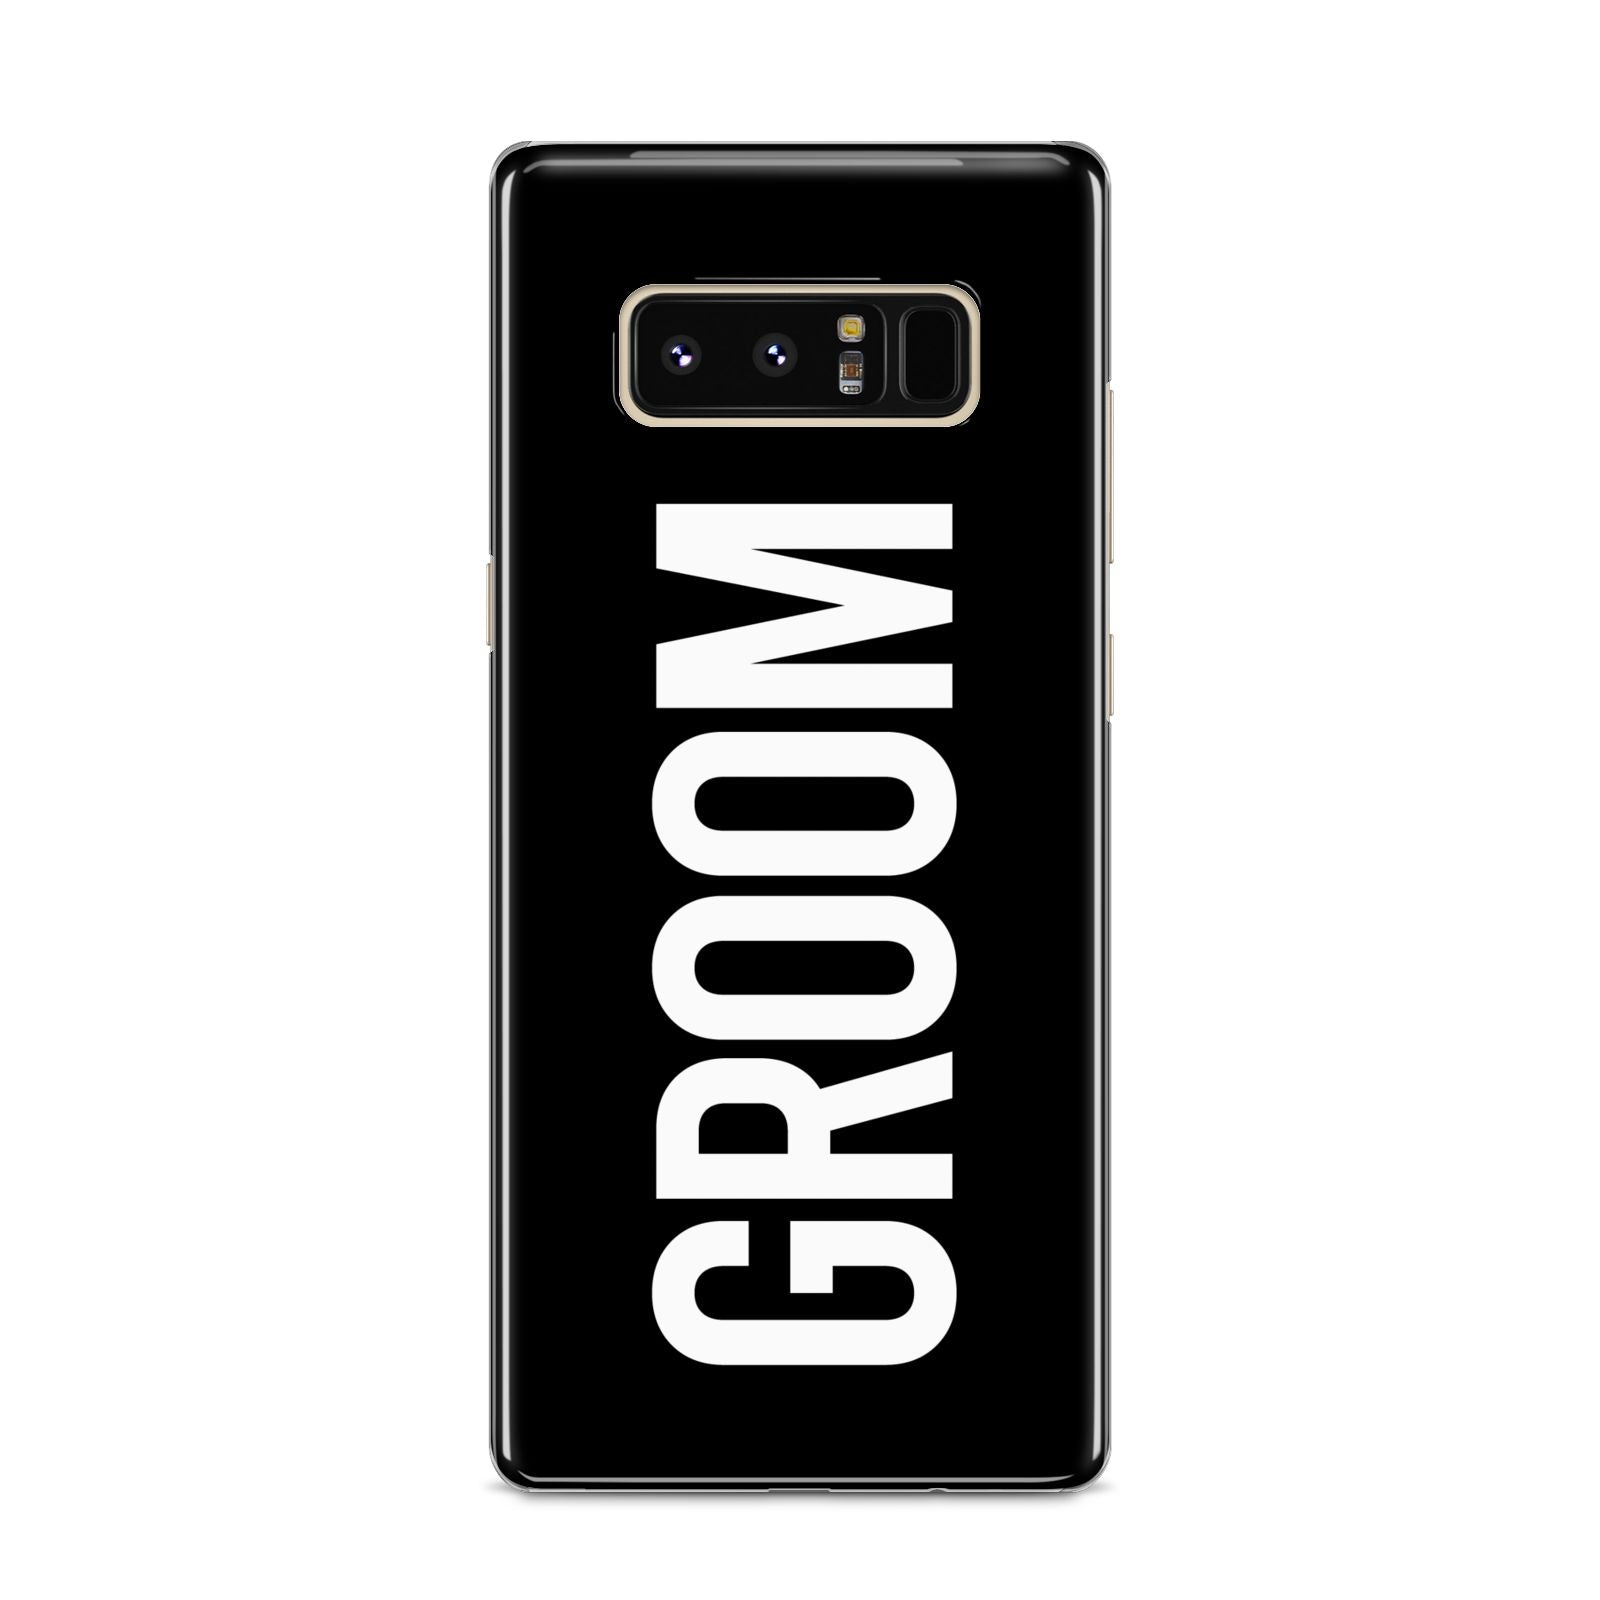 Groom Samsung Galaxy S8 Case